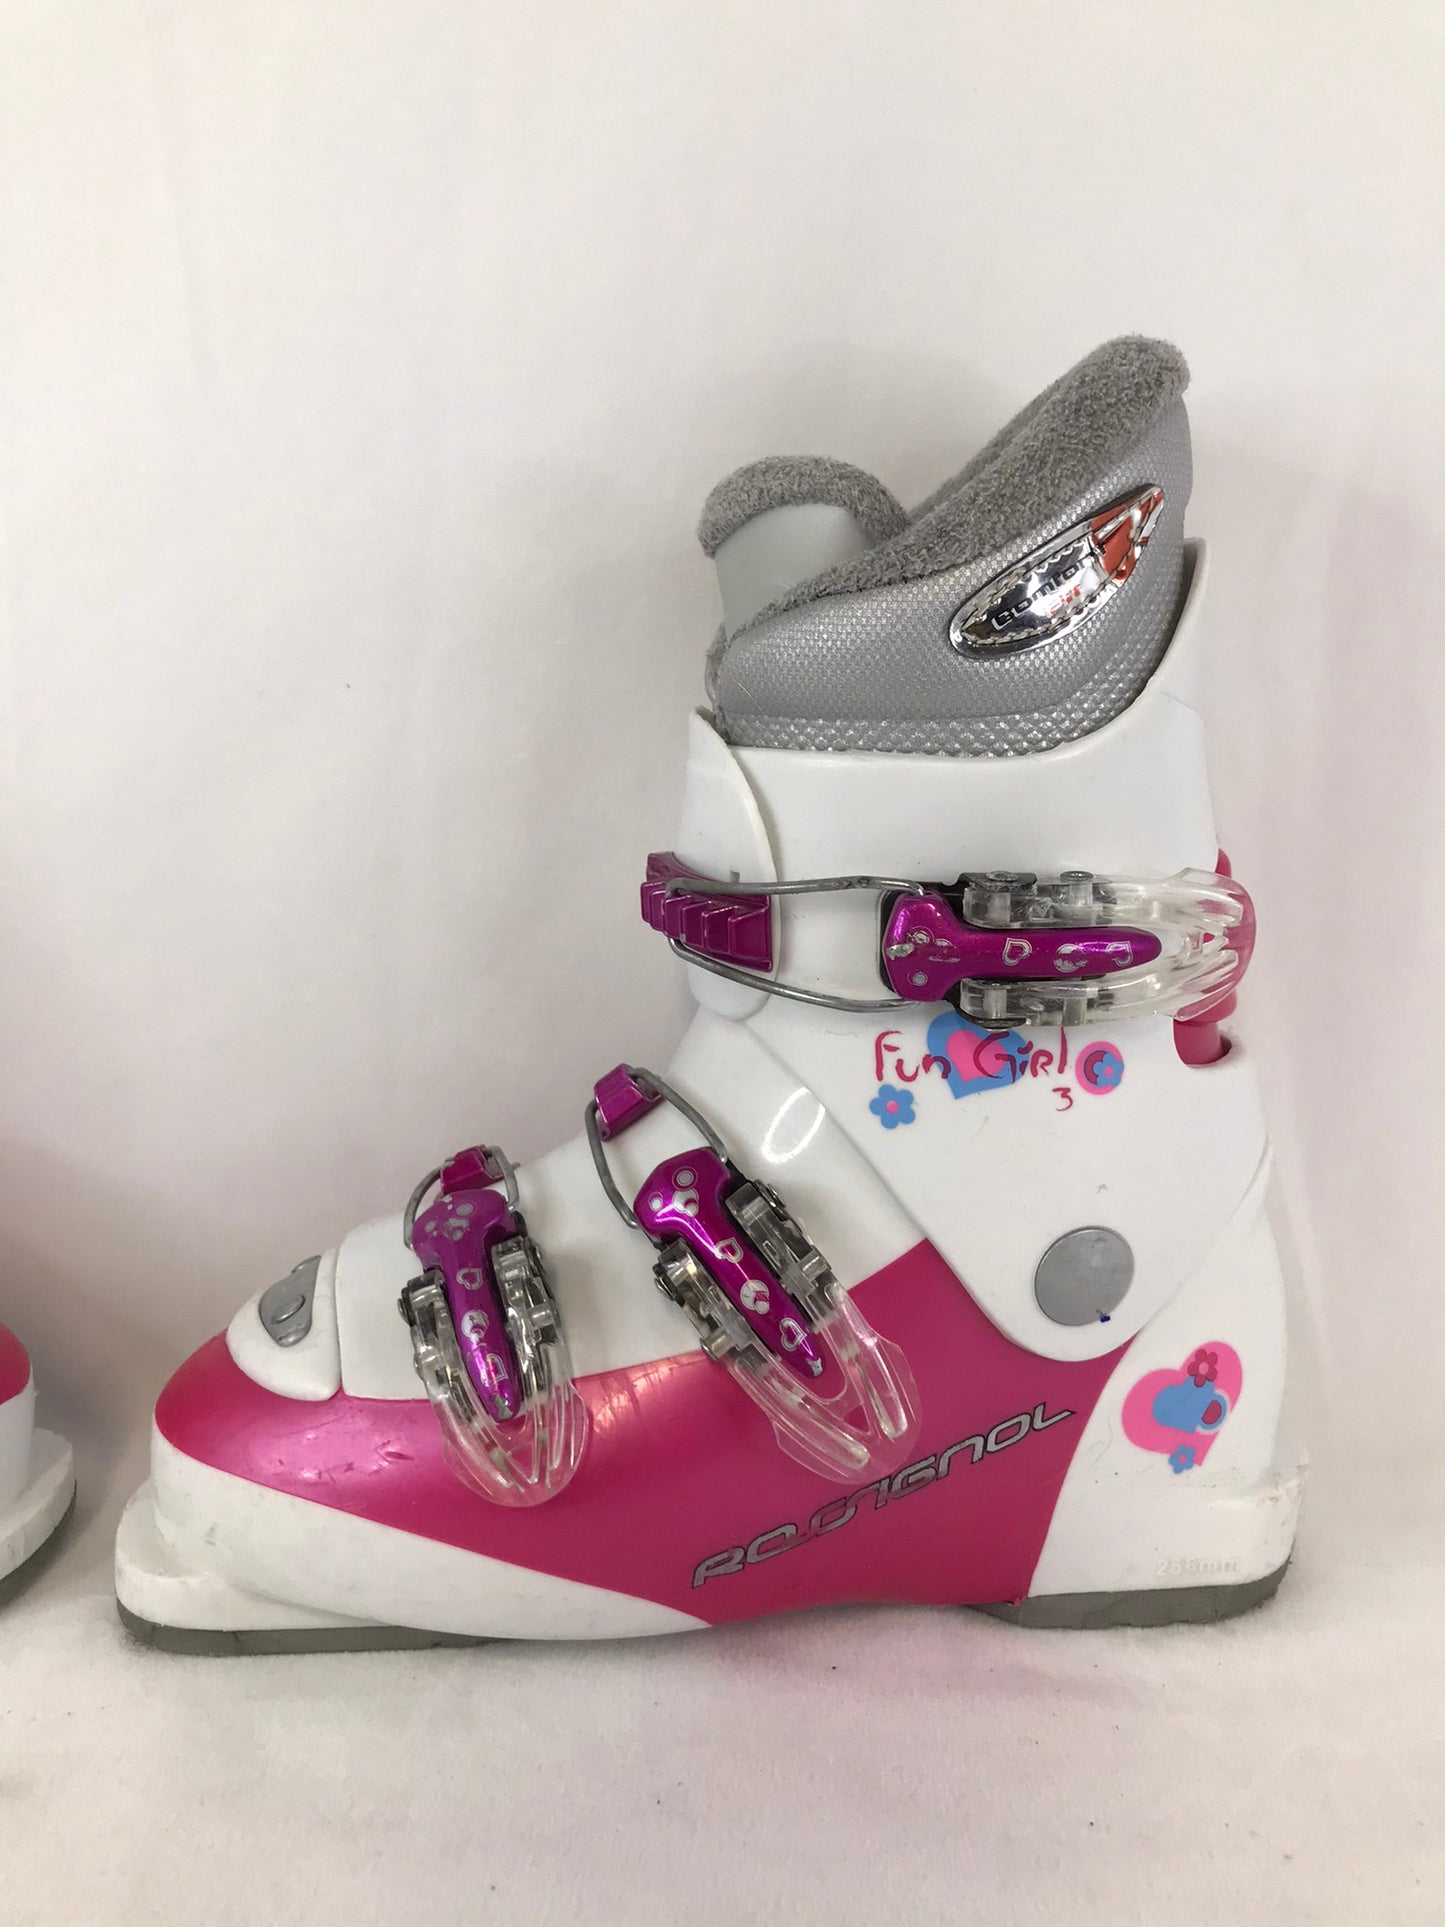 Ski Boots Mondo Size 21.5 Child Size 3-4 256 mm Rossignol Fun Girl White Pink